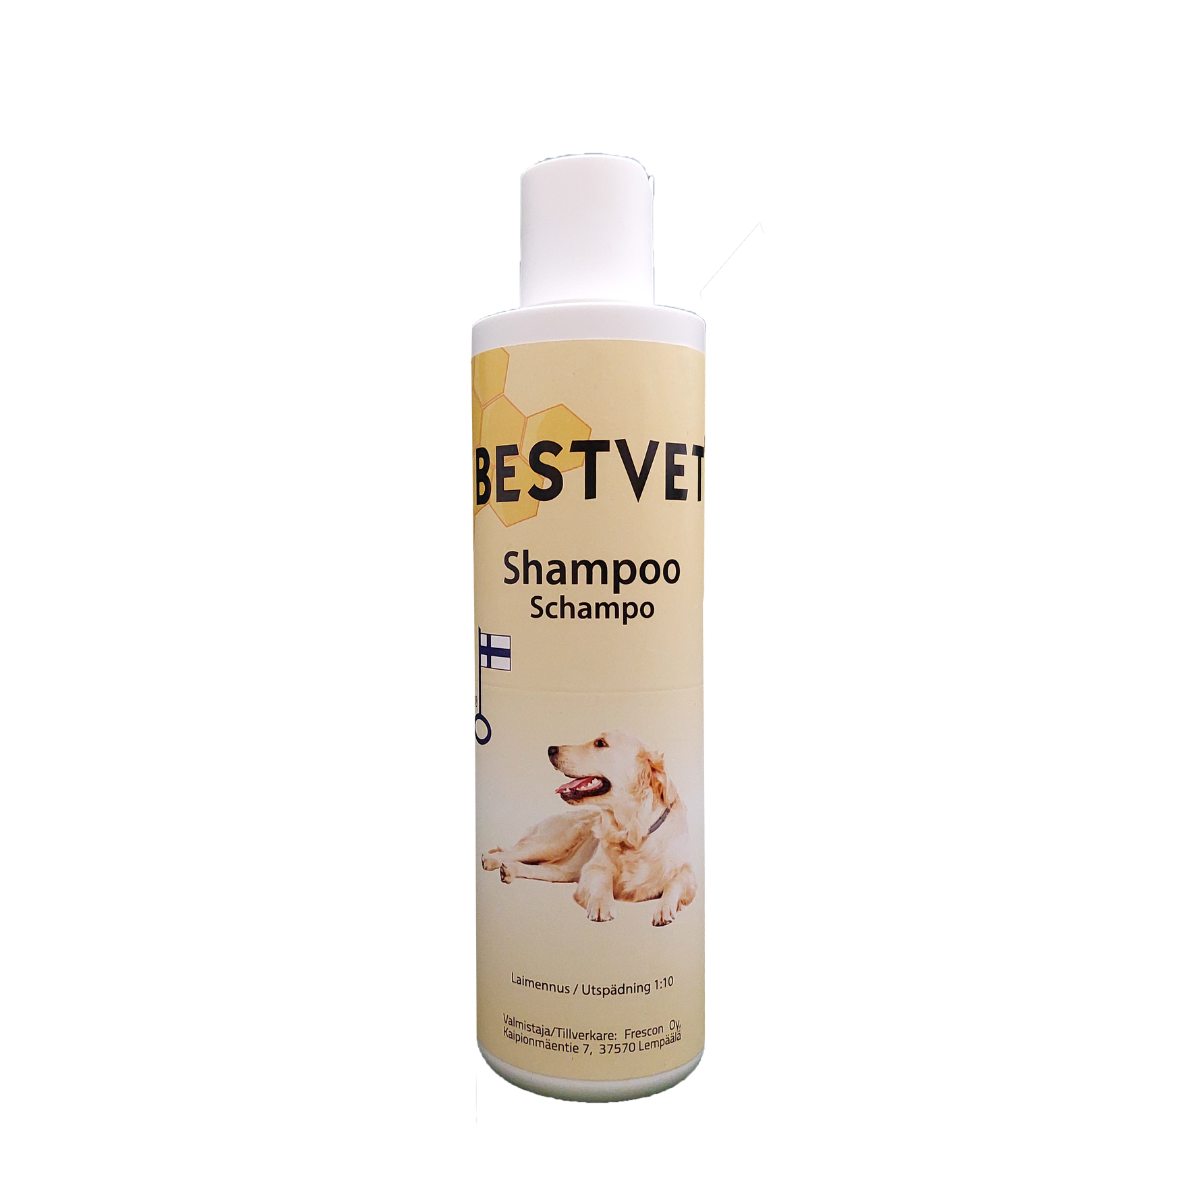 BESTVET Shampoo